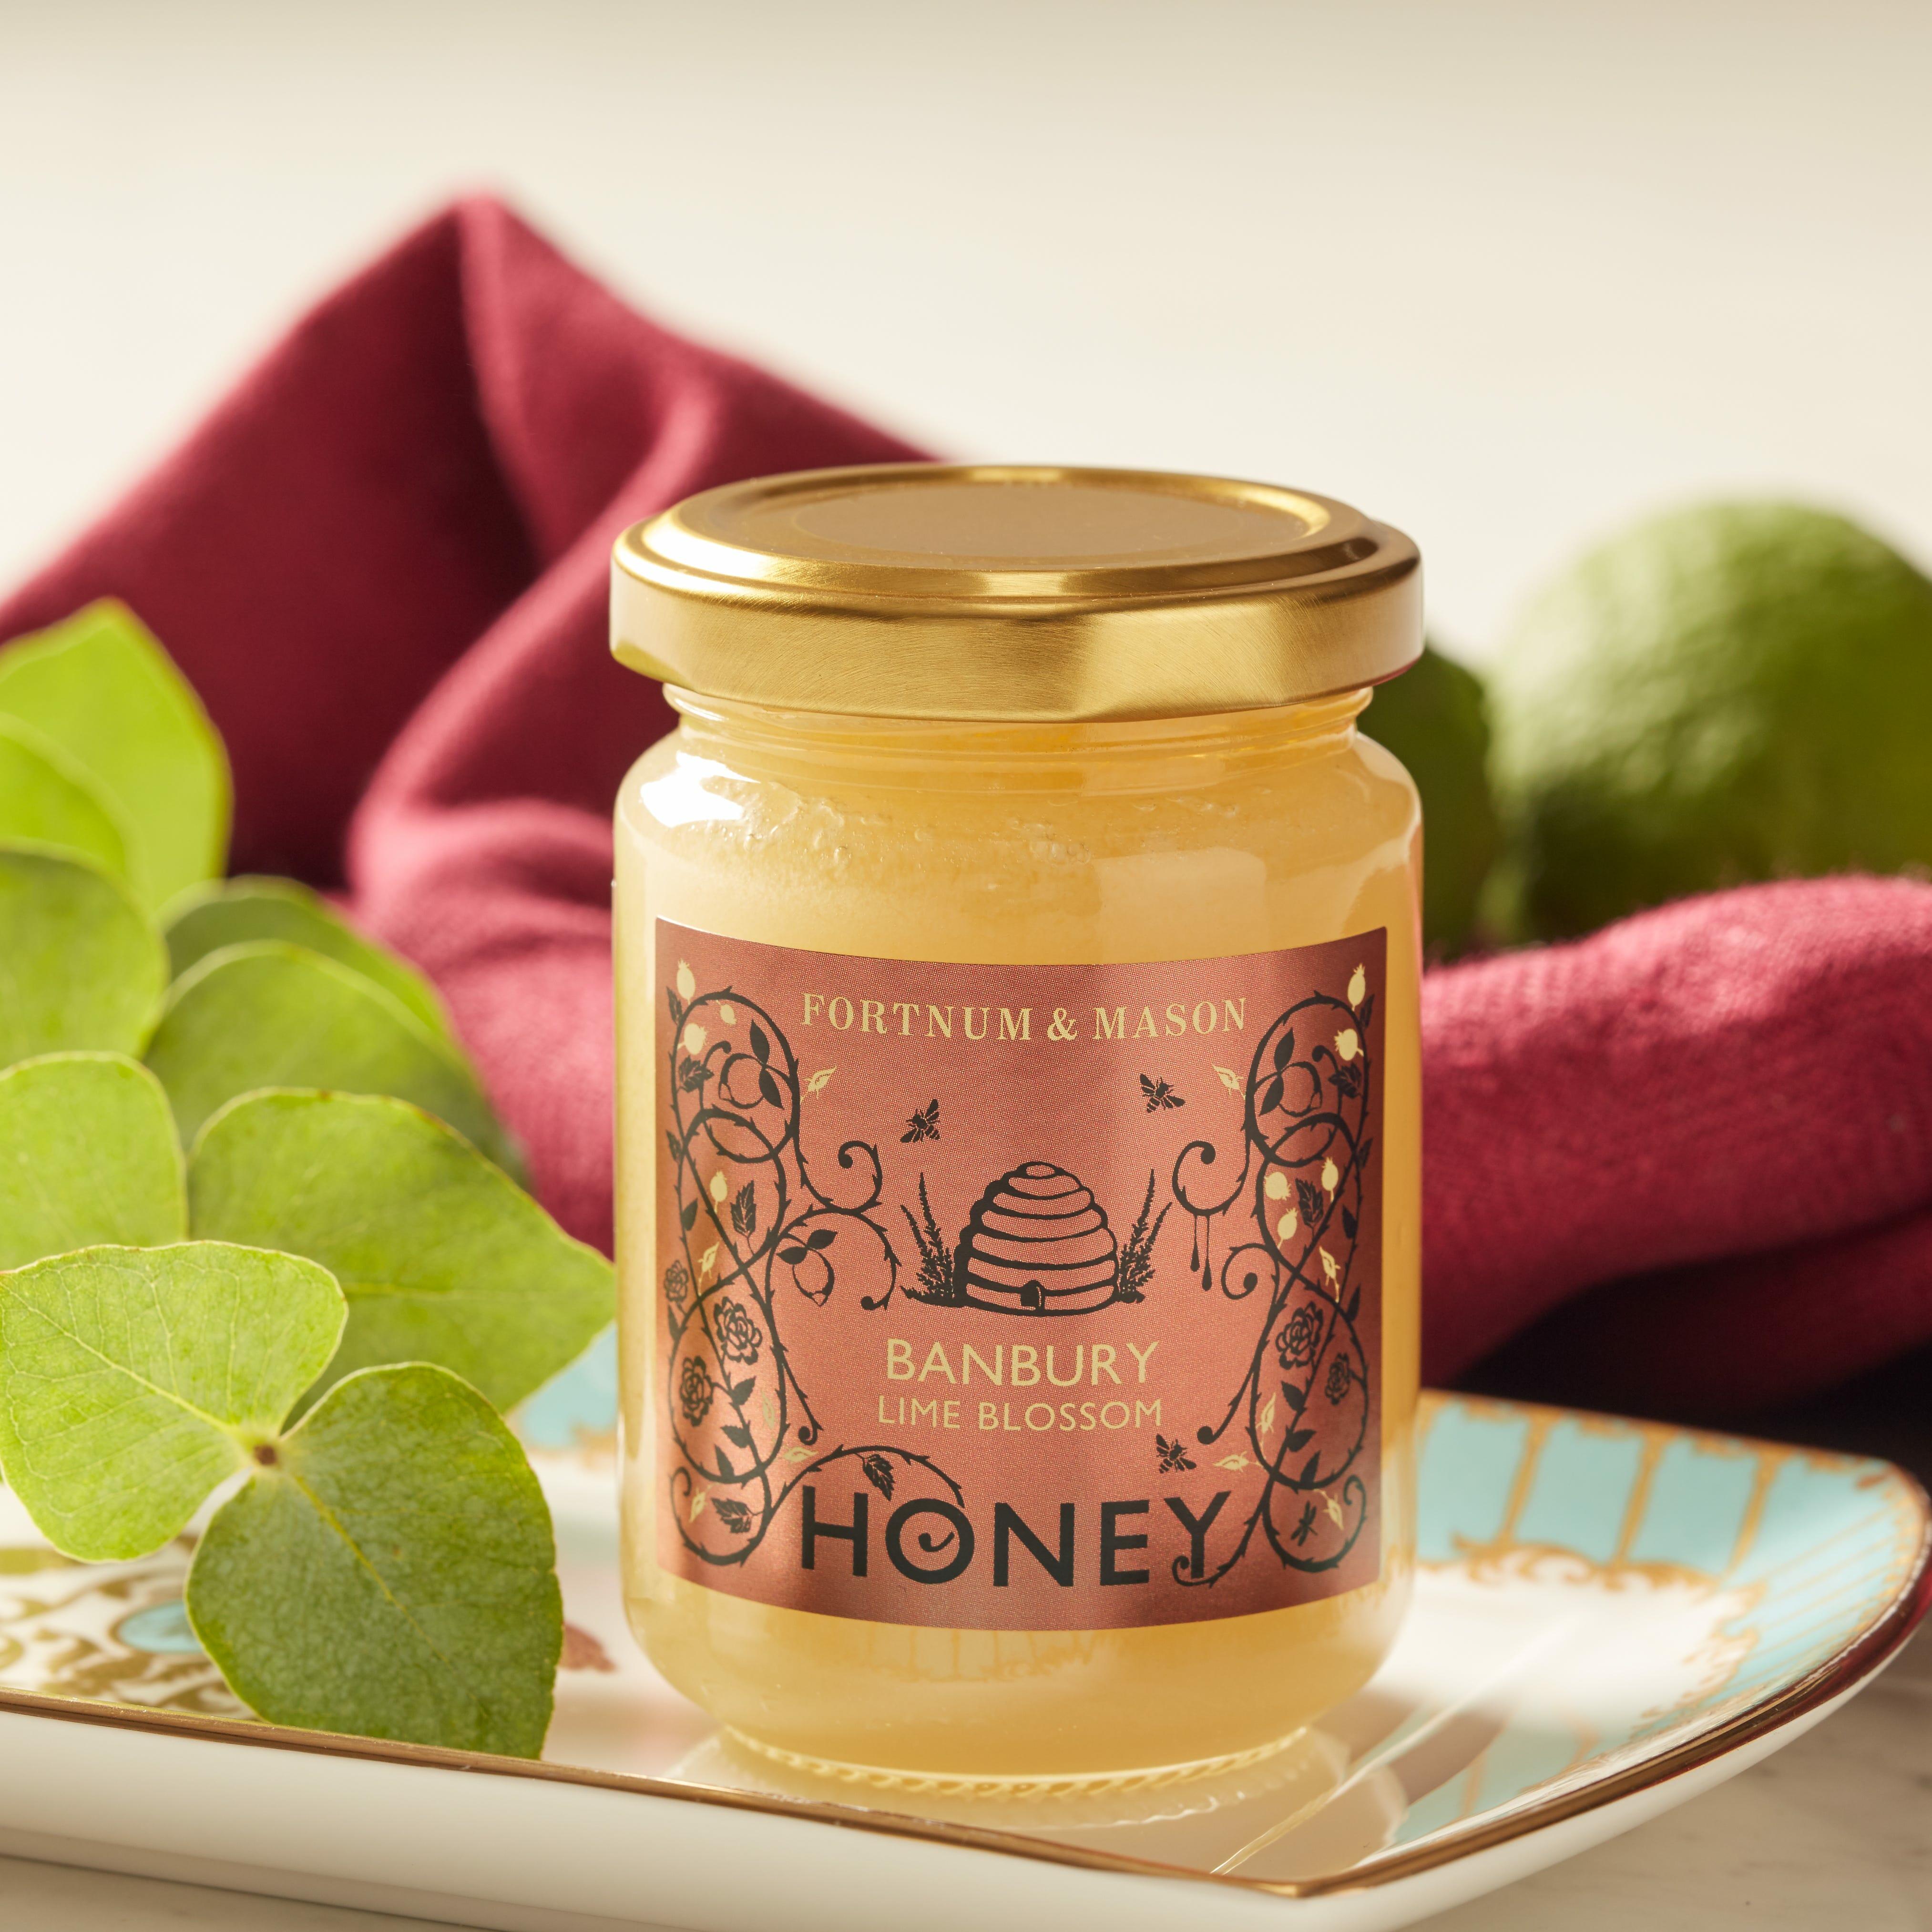 Fortnum & Mason Banbury Lime Blossom Honey, 200G